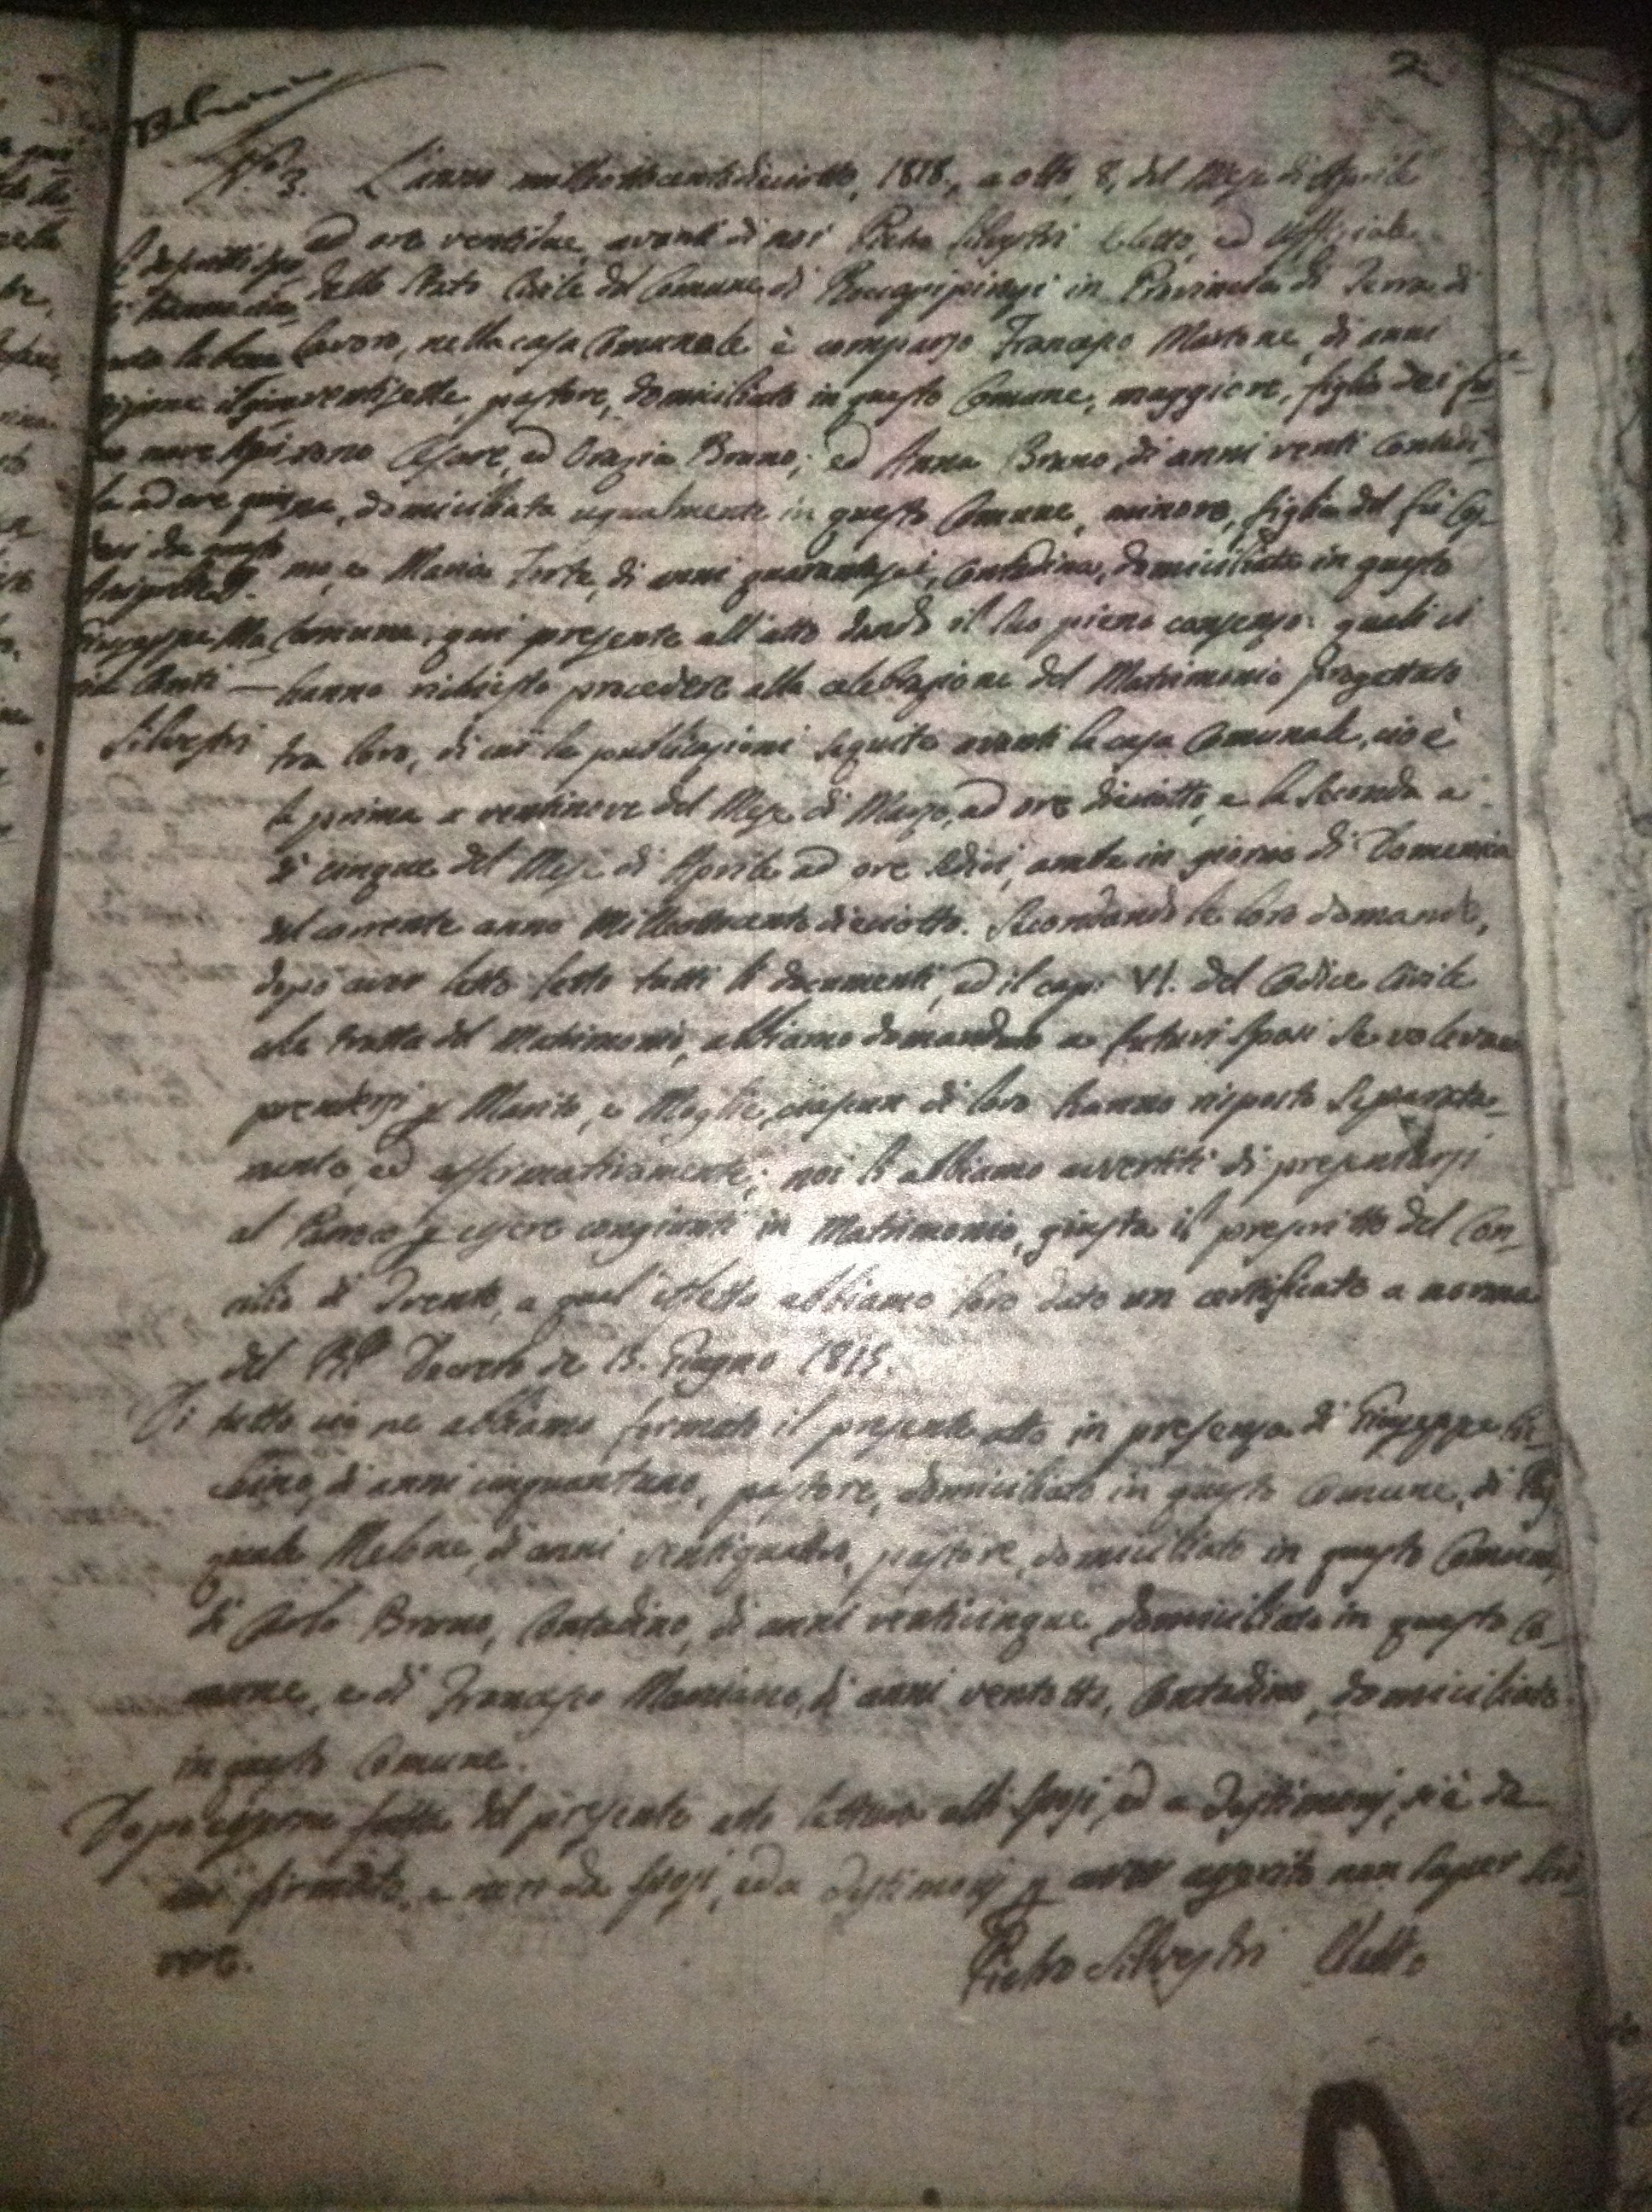 Civil Marriage Registration, Roccapipirozzi, Kingdom of Naples, 1818